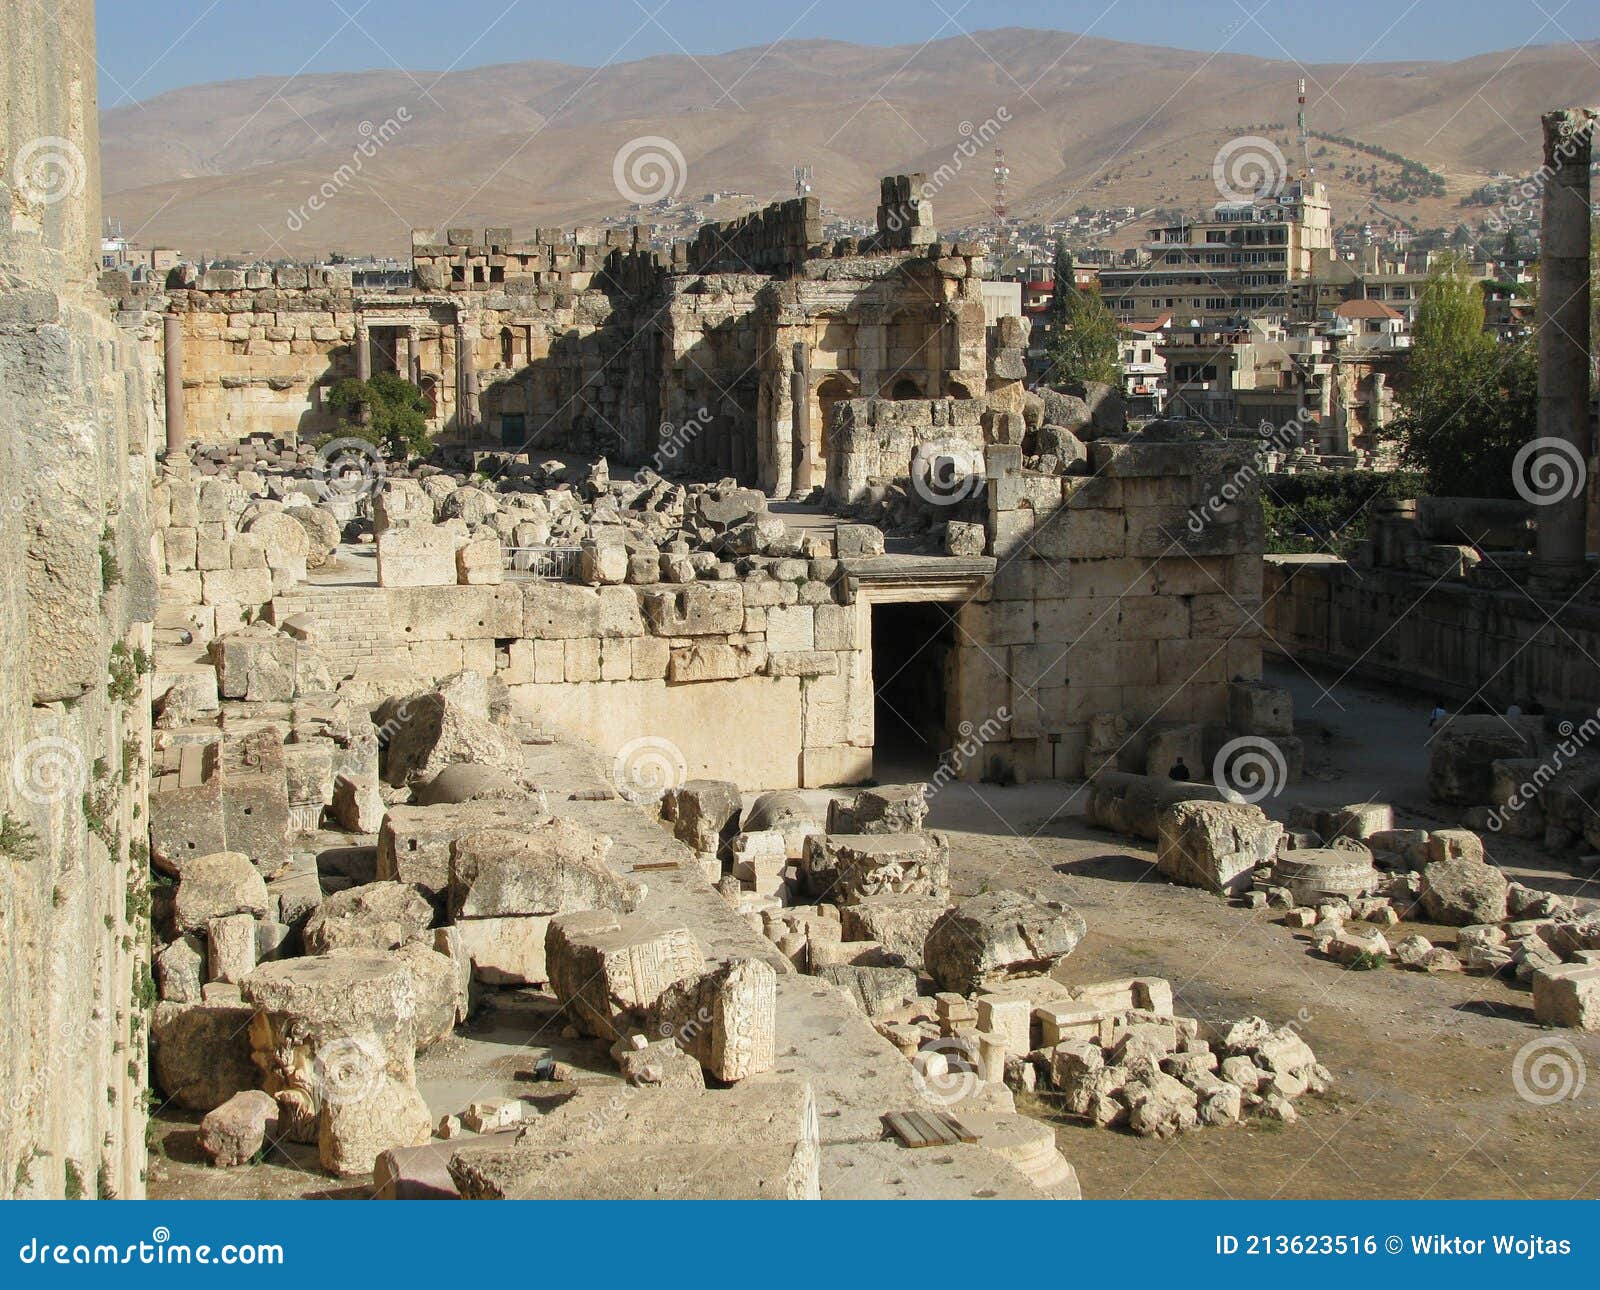 baalbek-temple-complex-lebanon-baalbek-temple-complex-modern-lebanon-includes-two-largest-grandest-roman-213623516.jpg